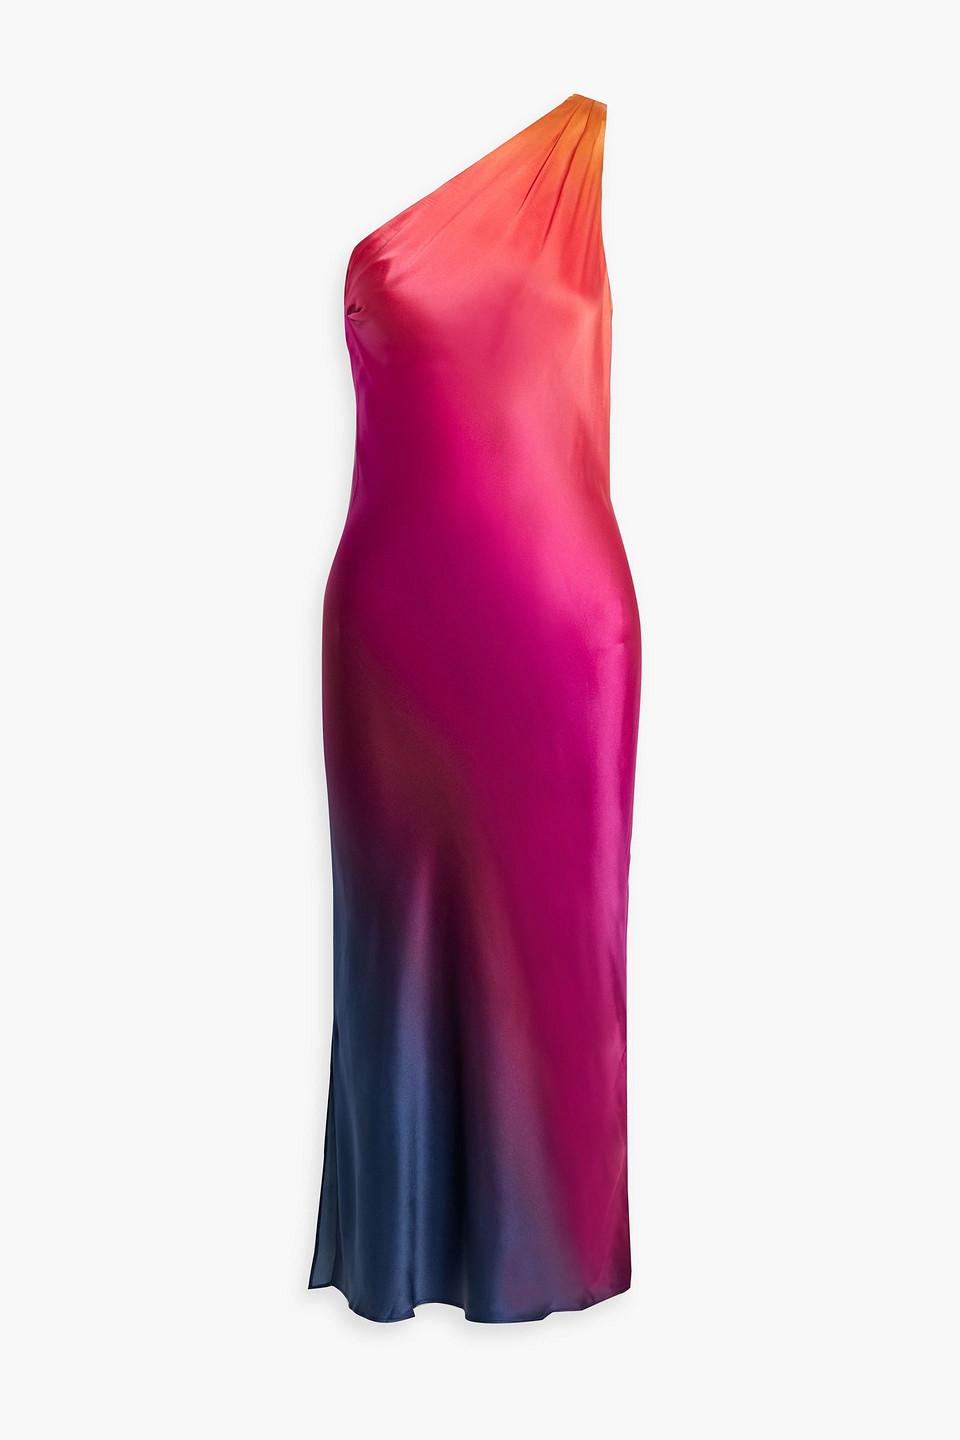 Cami NYC Anges One-shoulder Dégradé Silk-satin Midi Dress in Pink | Lyst